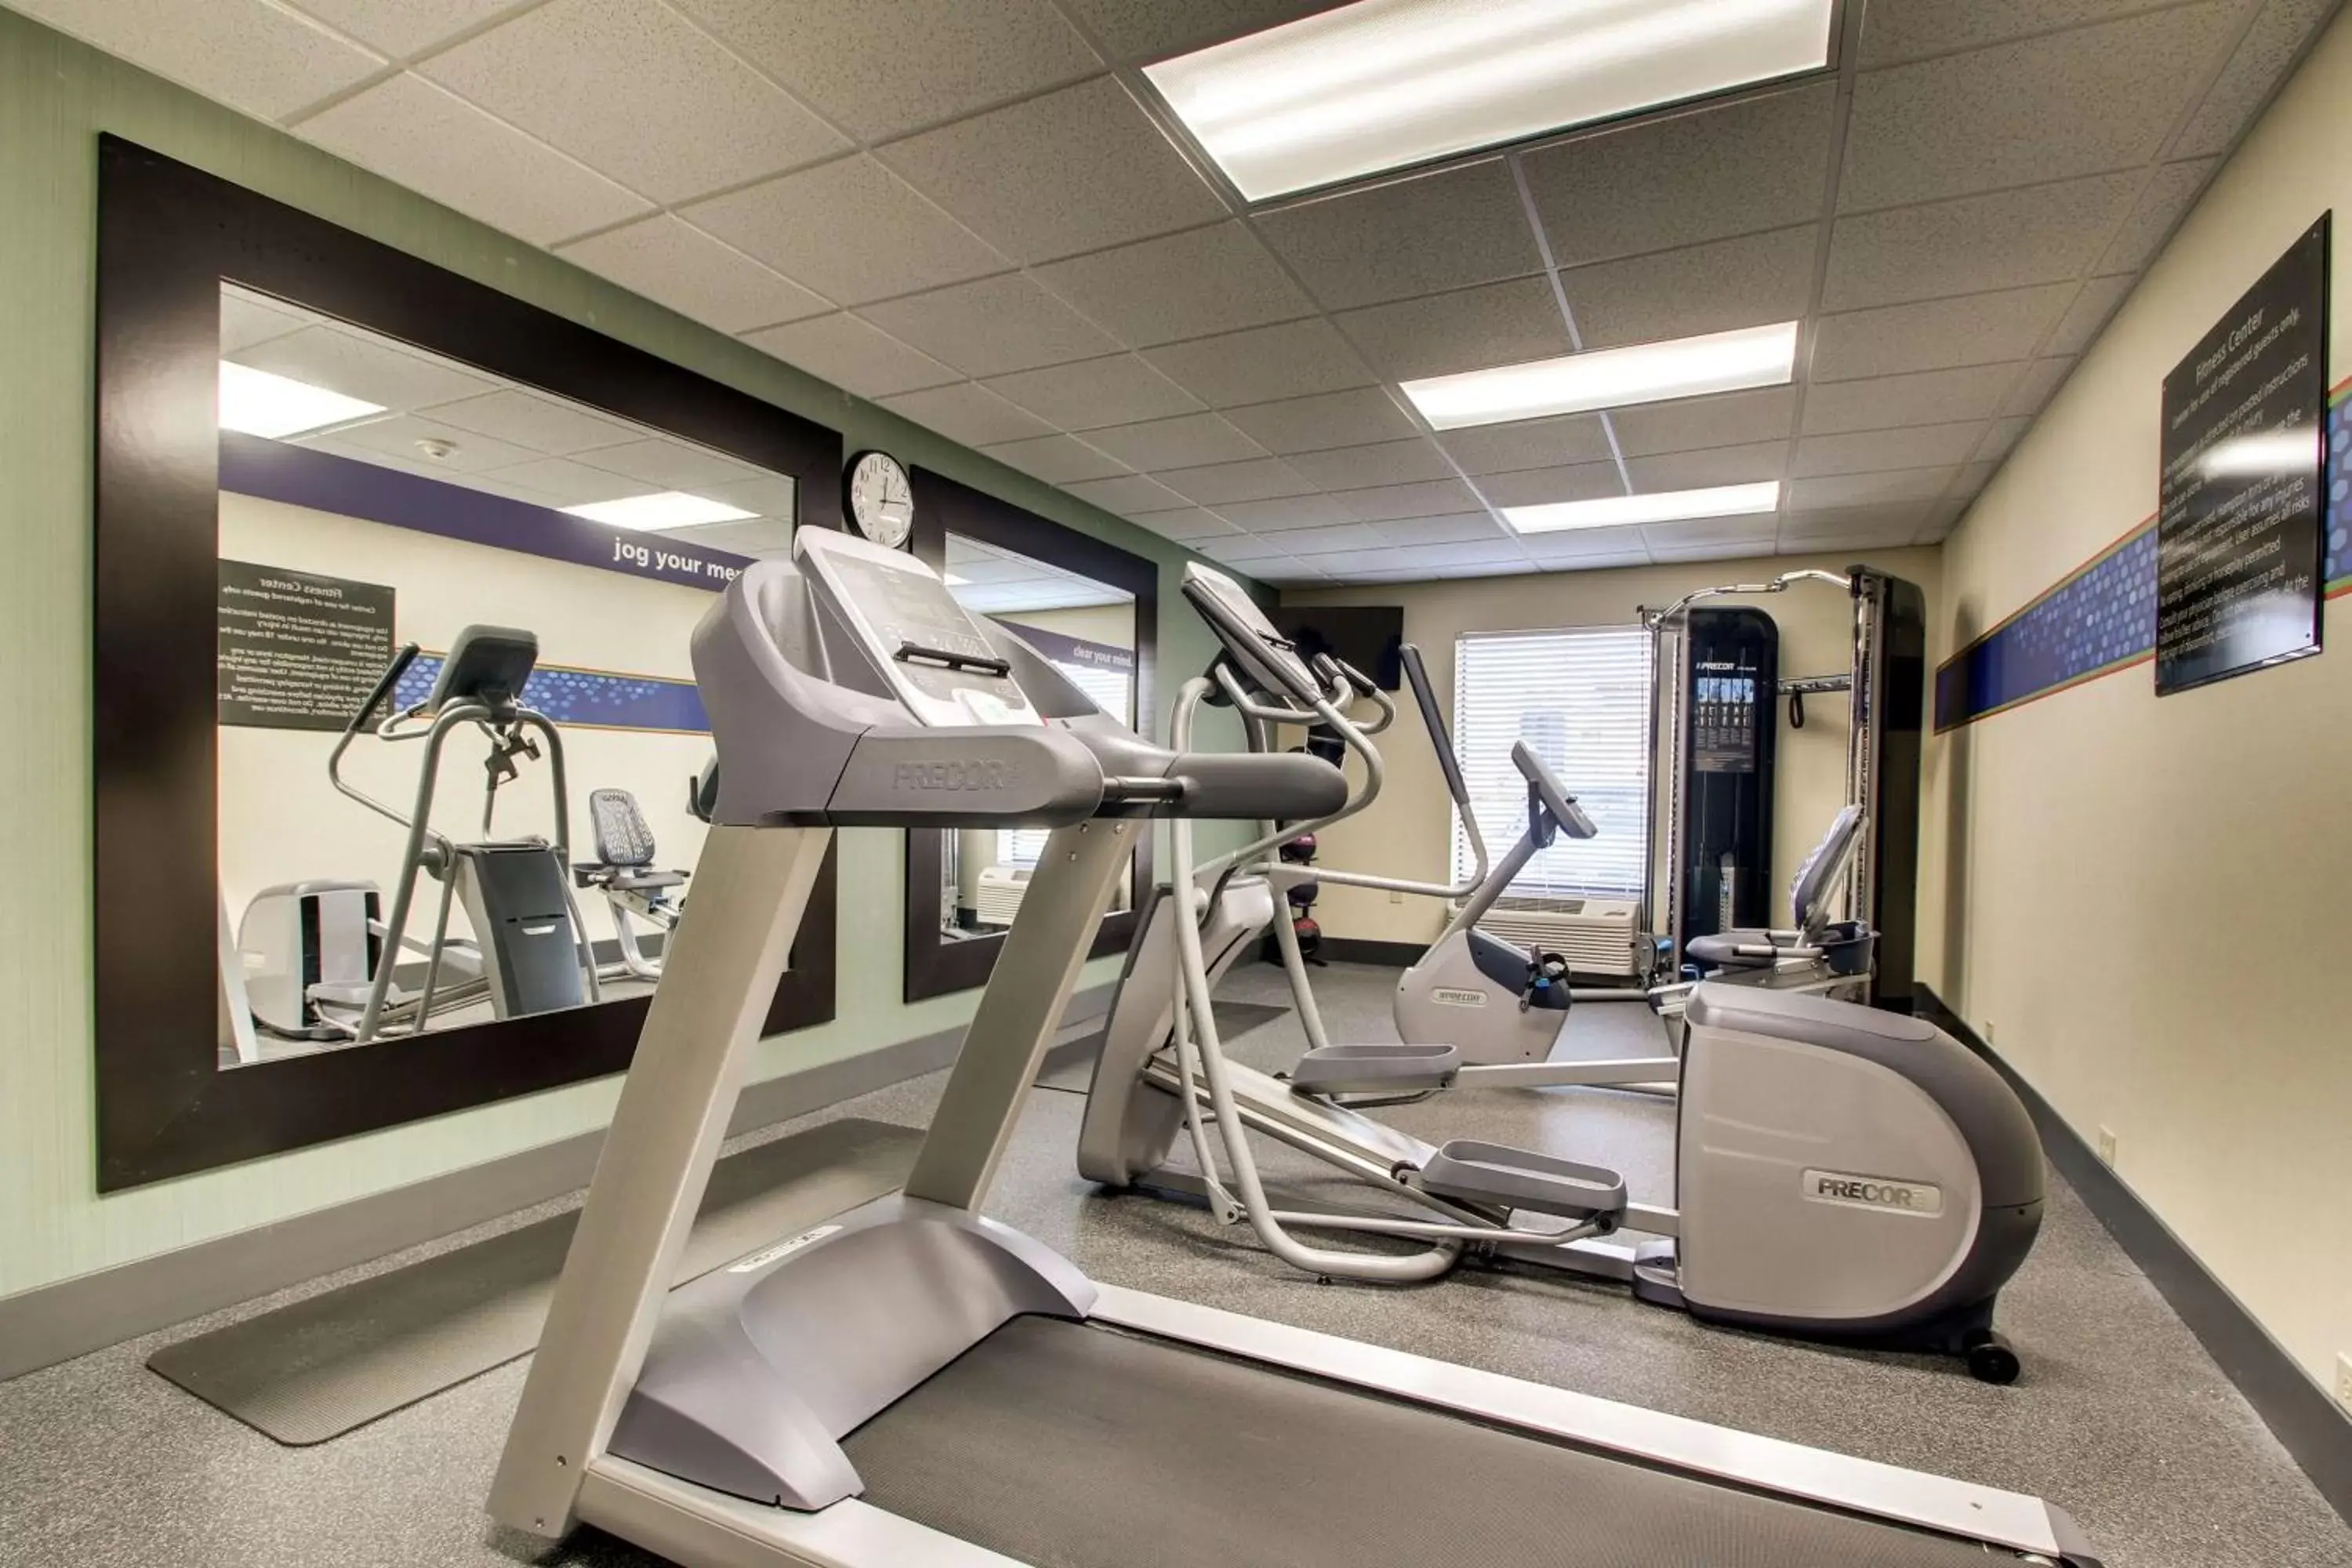 Fitness centre/facilities, Fitness Center/Facilities in Hampton Inn Yemassee/Point South, Sc